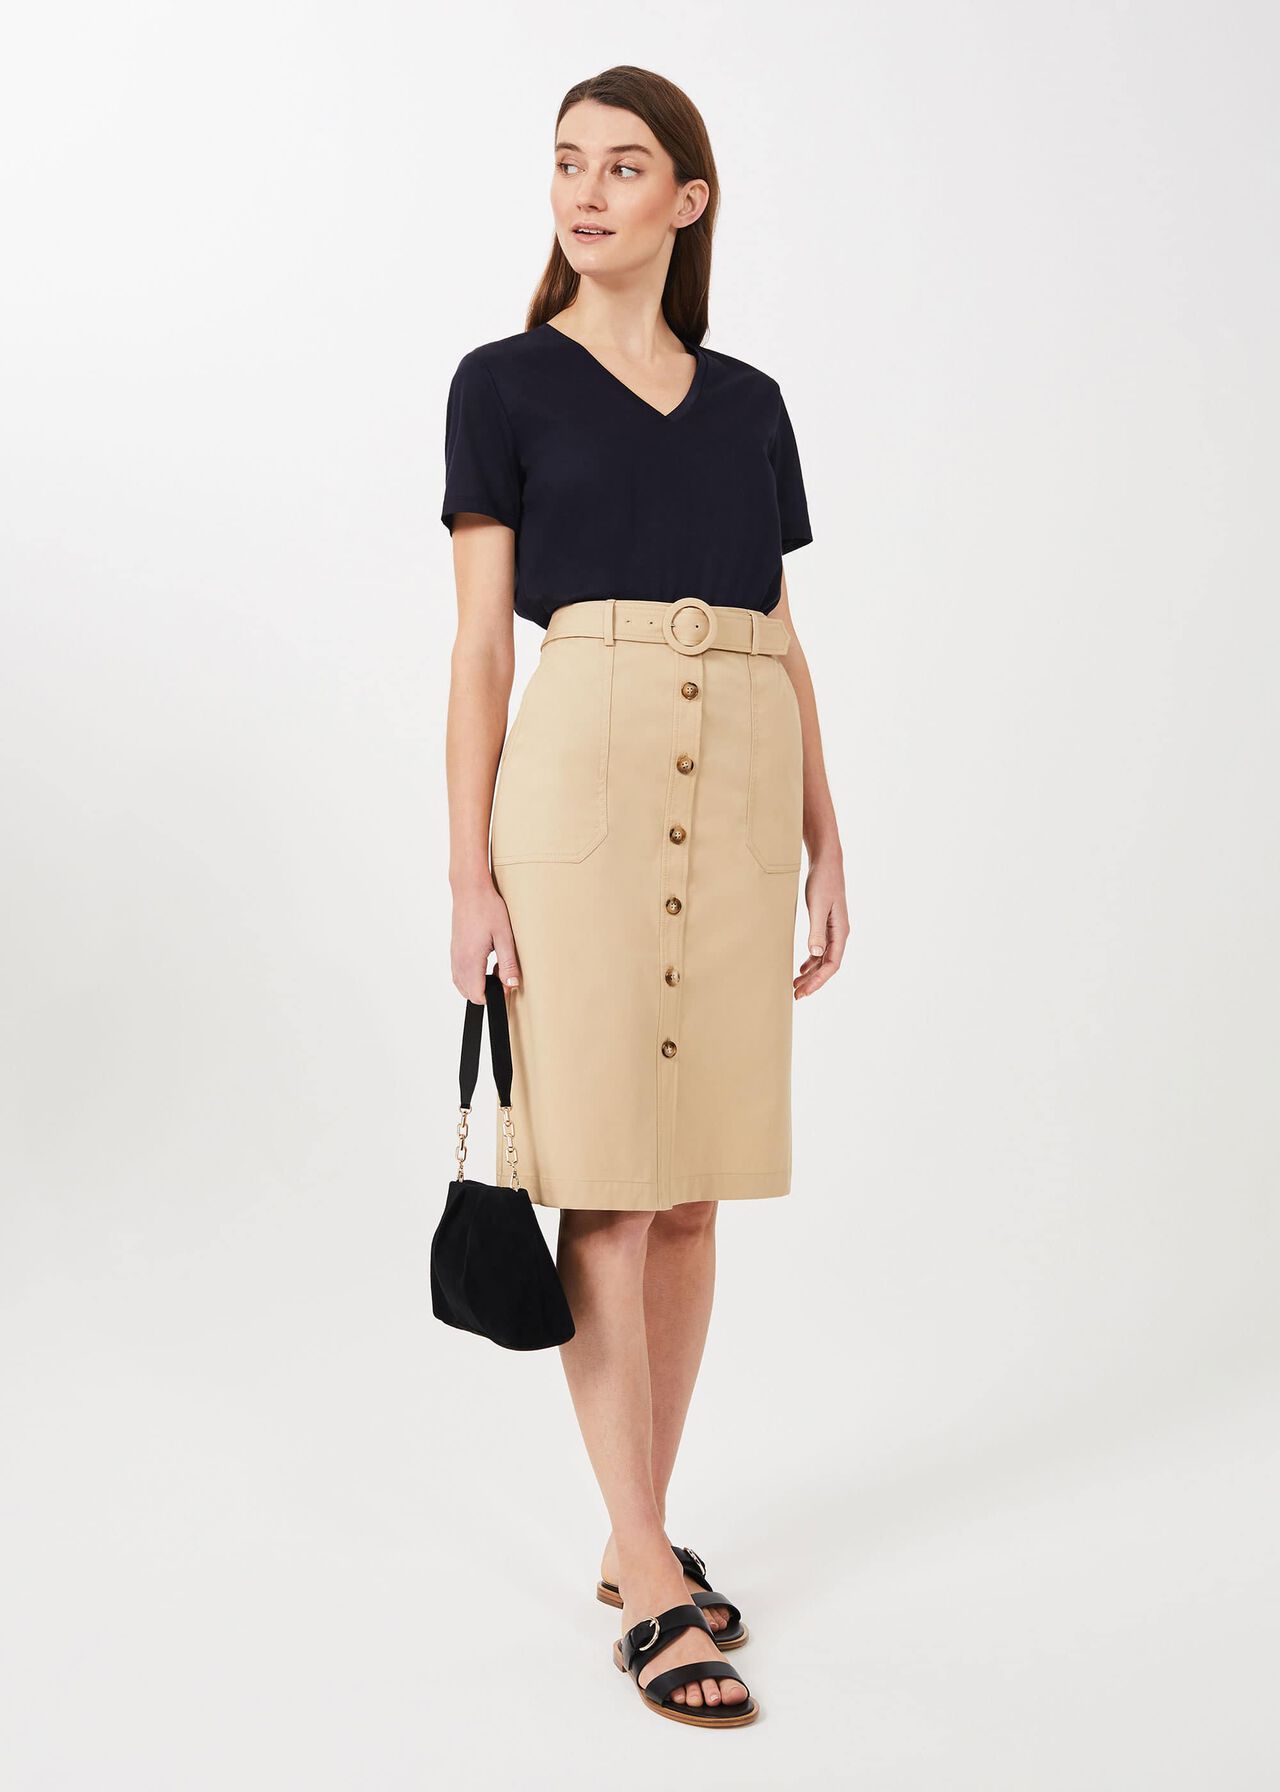 Adaline Skirt, Sand, hi-res